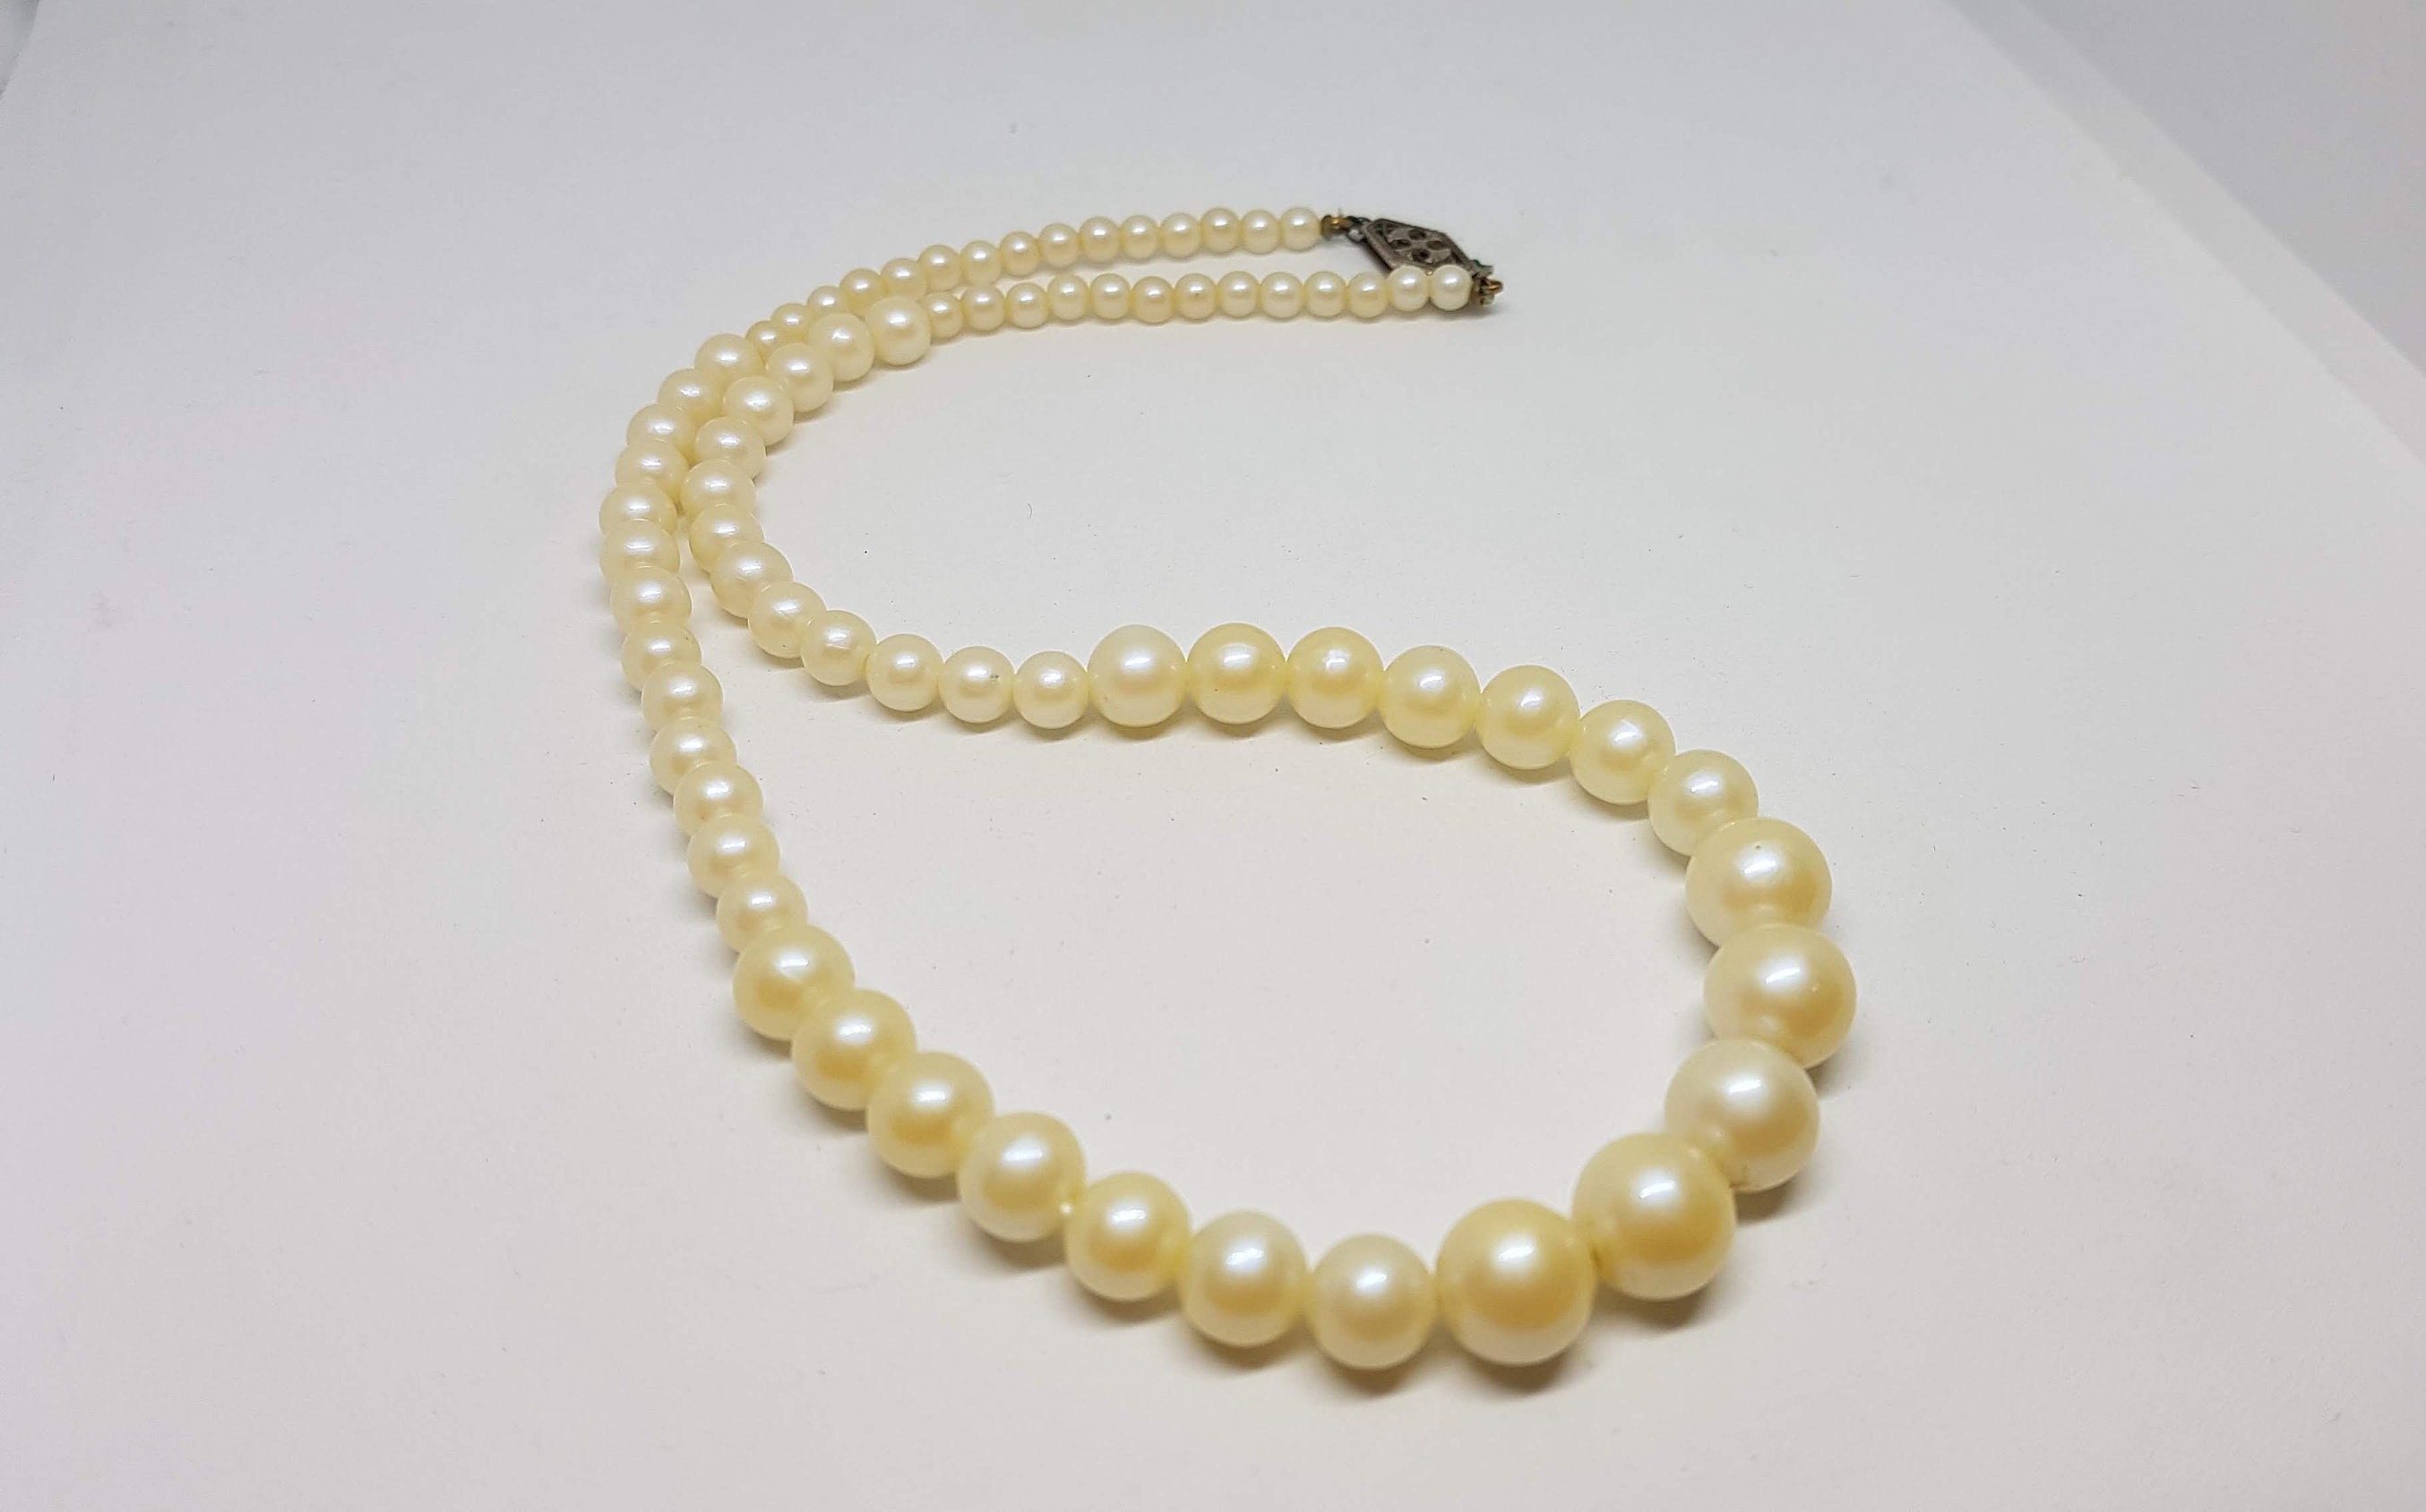 Vintage delightful large blush faux pearls